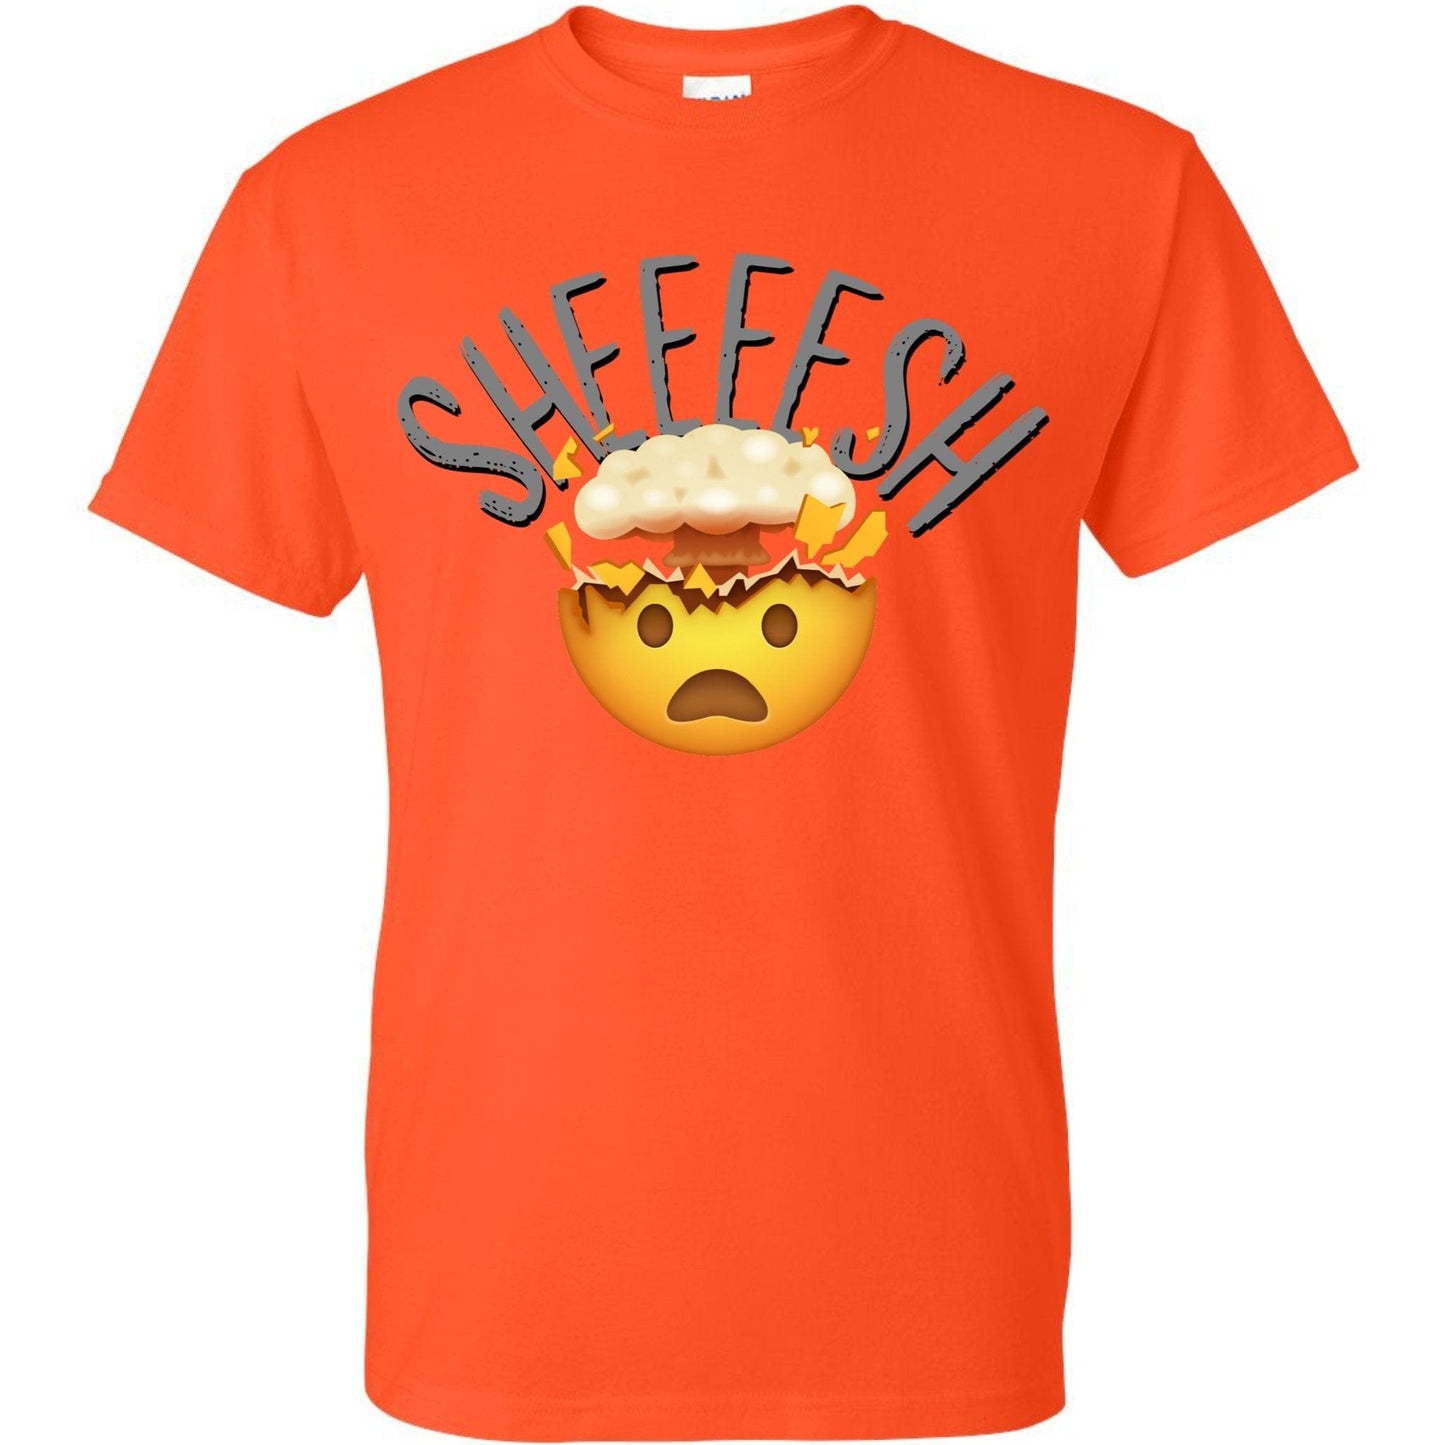 InsensitiviTees Shirts S / Orange Sheeeesh! T-shirt